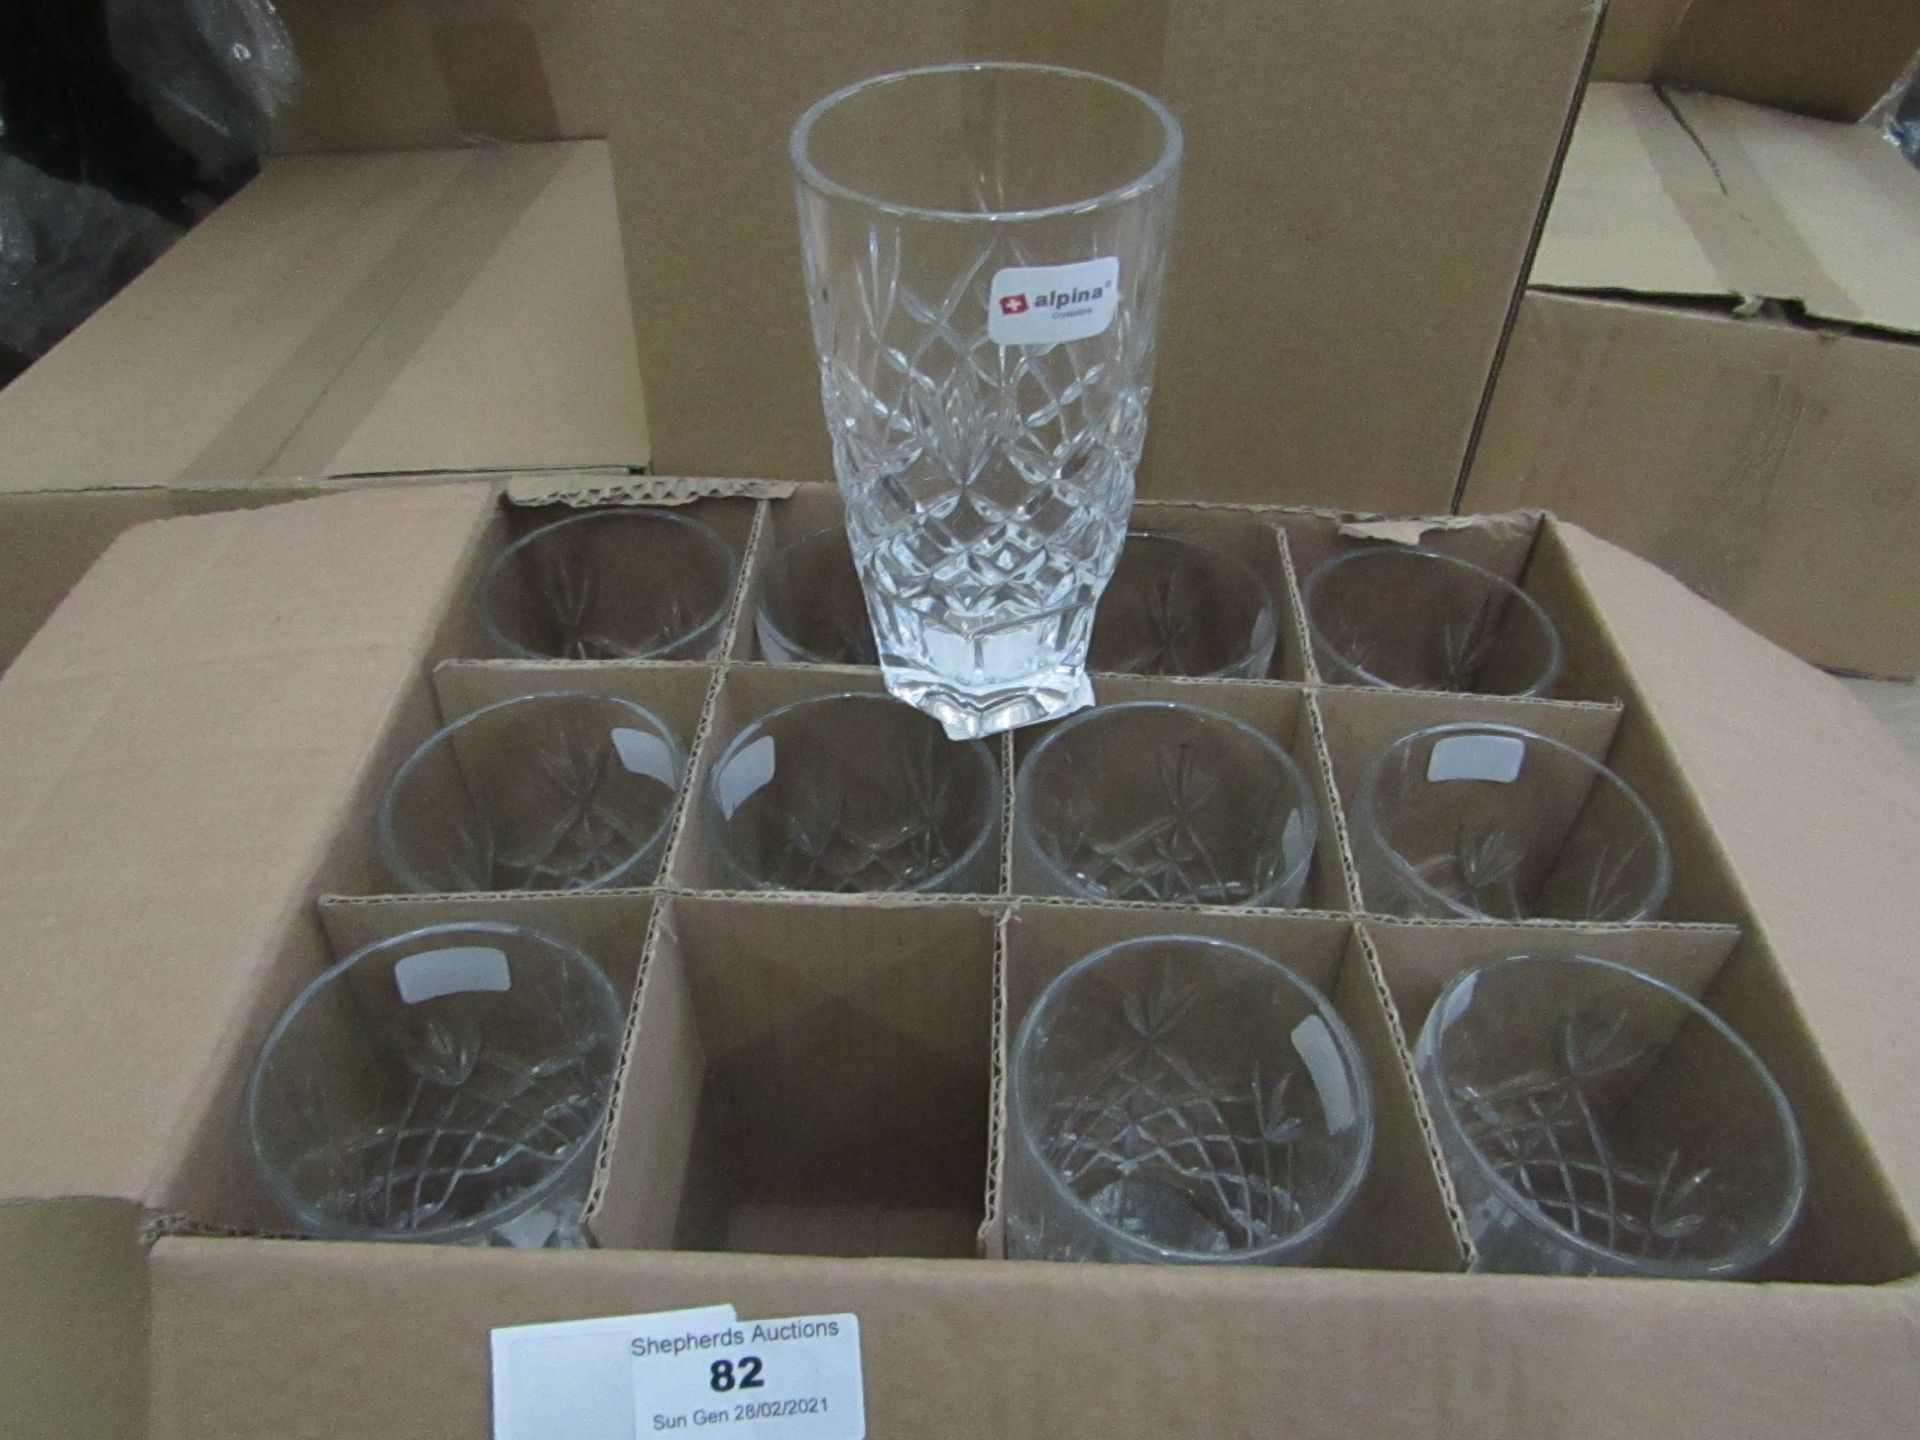 12x Alpina Crystaline - 320ML Glass Tumblers - New & Boxed.